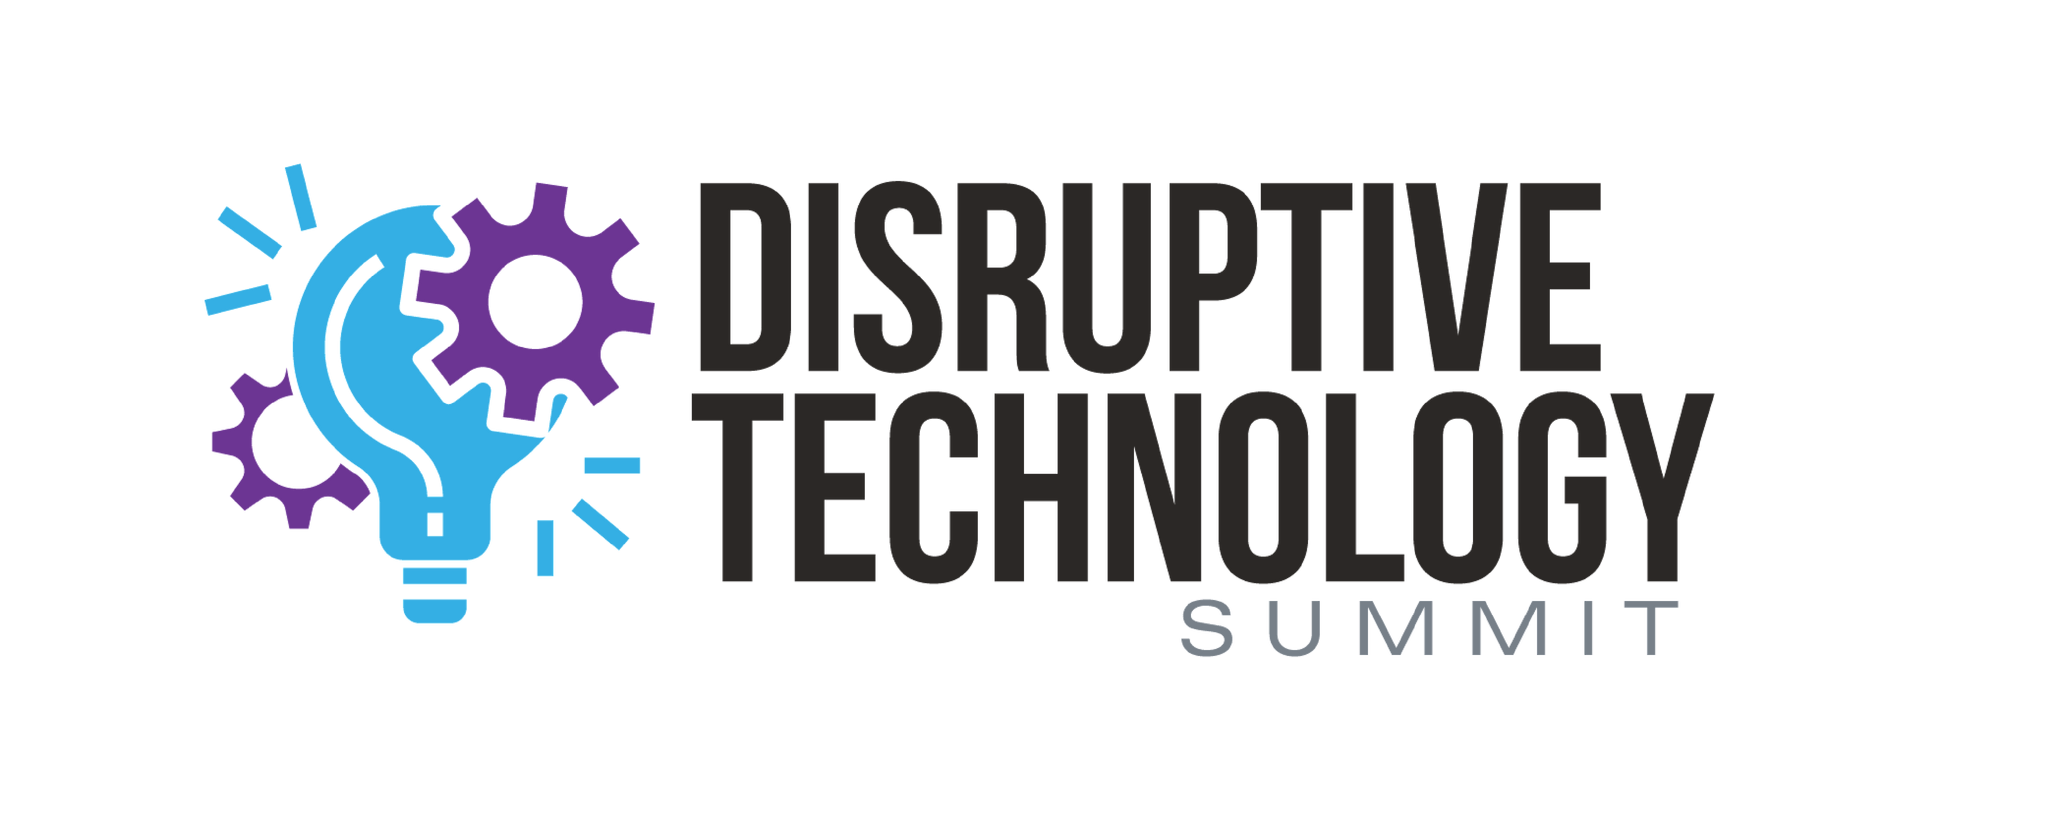 Disruptive Technology Summit at Sydney Build Expo logo